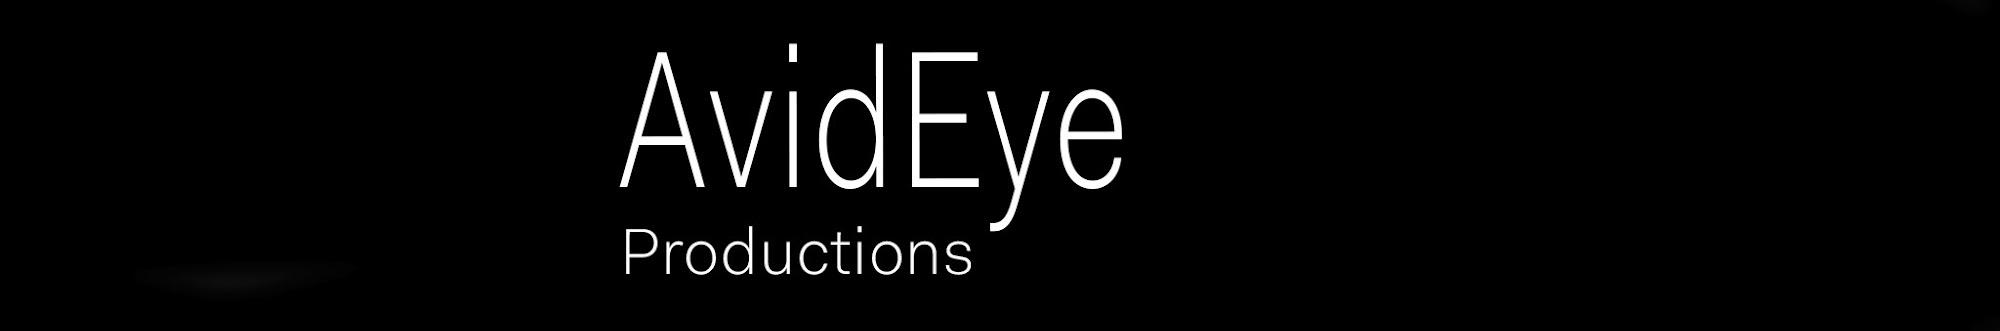 AvidEye Productions